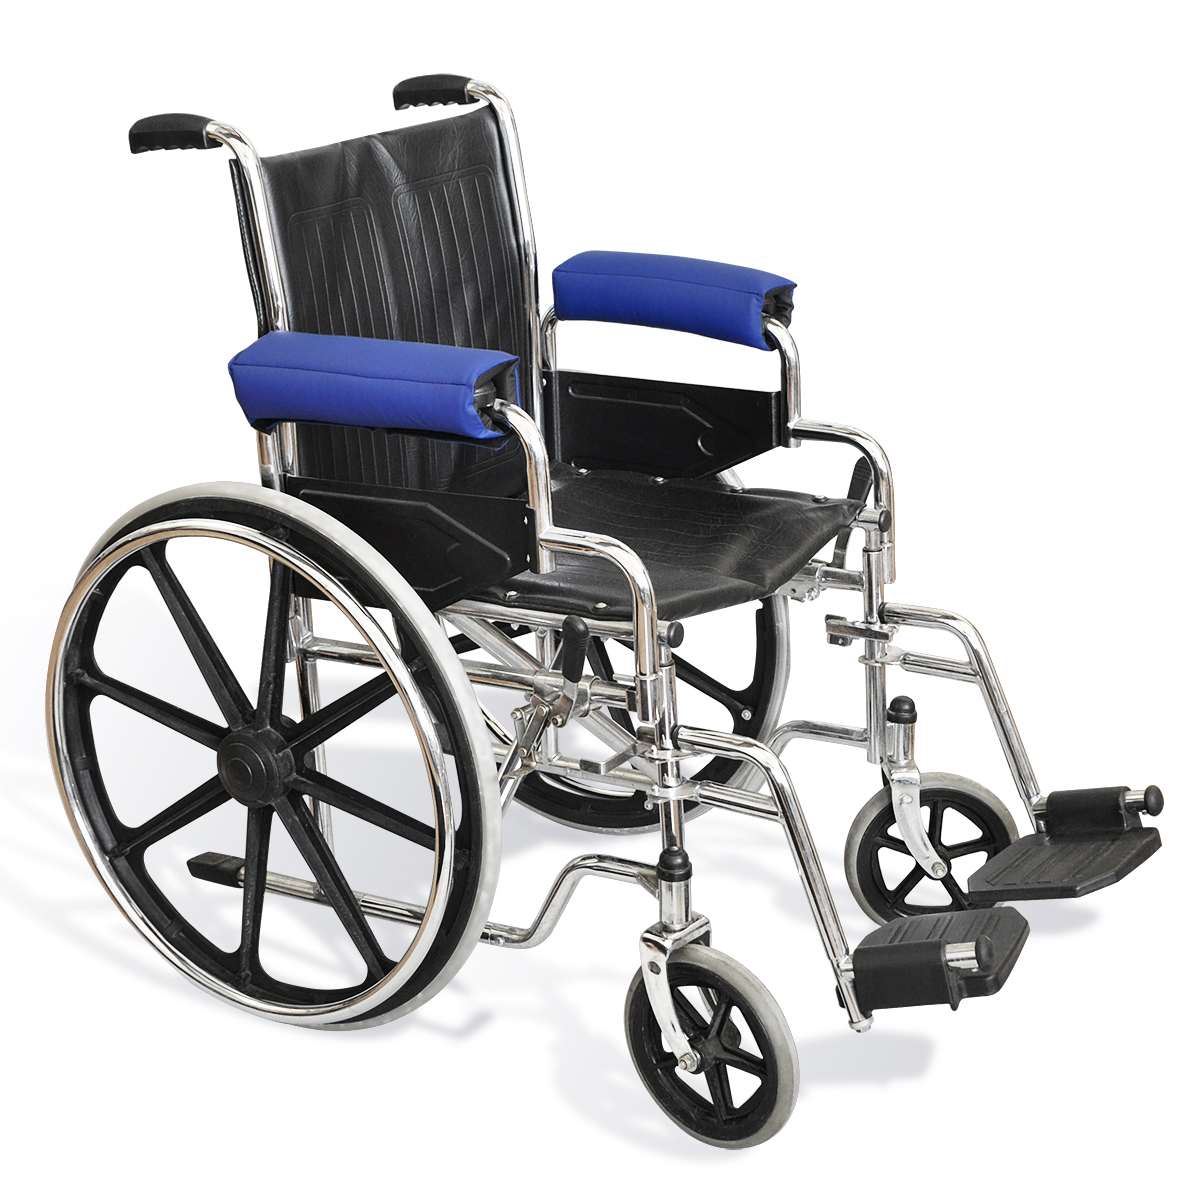 NYOrtho Wheelchair Armrest Covers